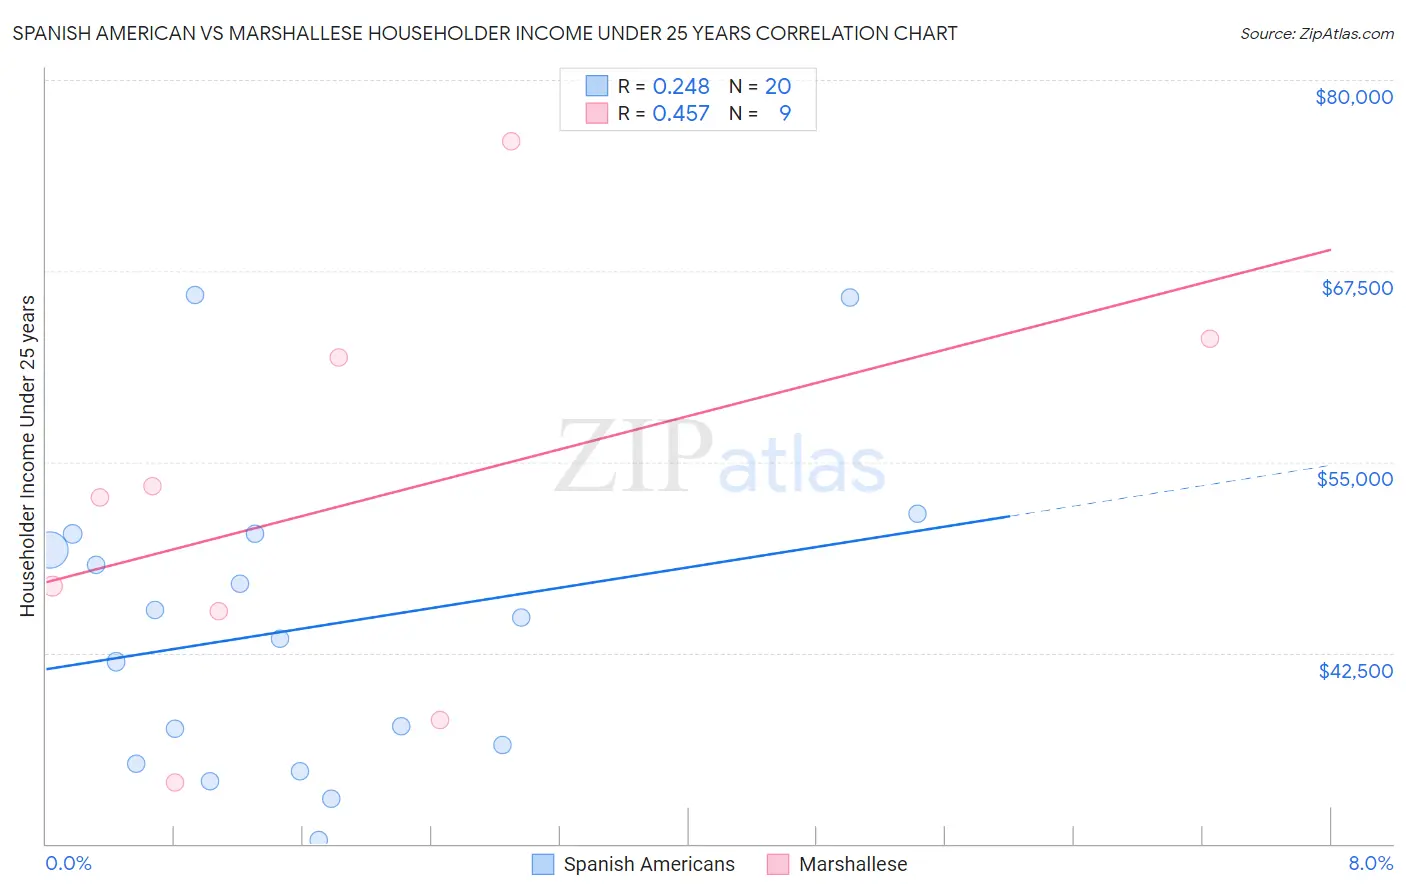 Spanish American vs Marshallese Householder Income Under 25 years